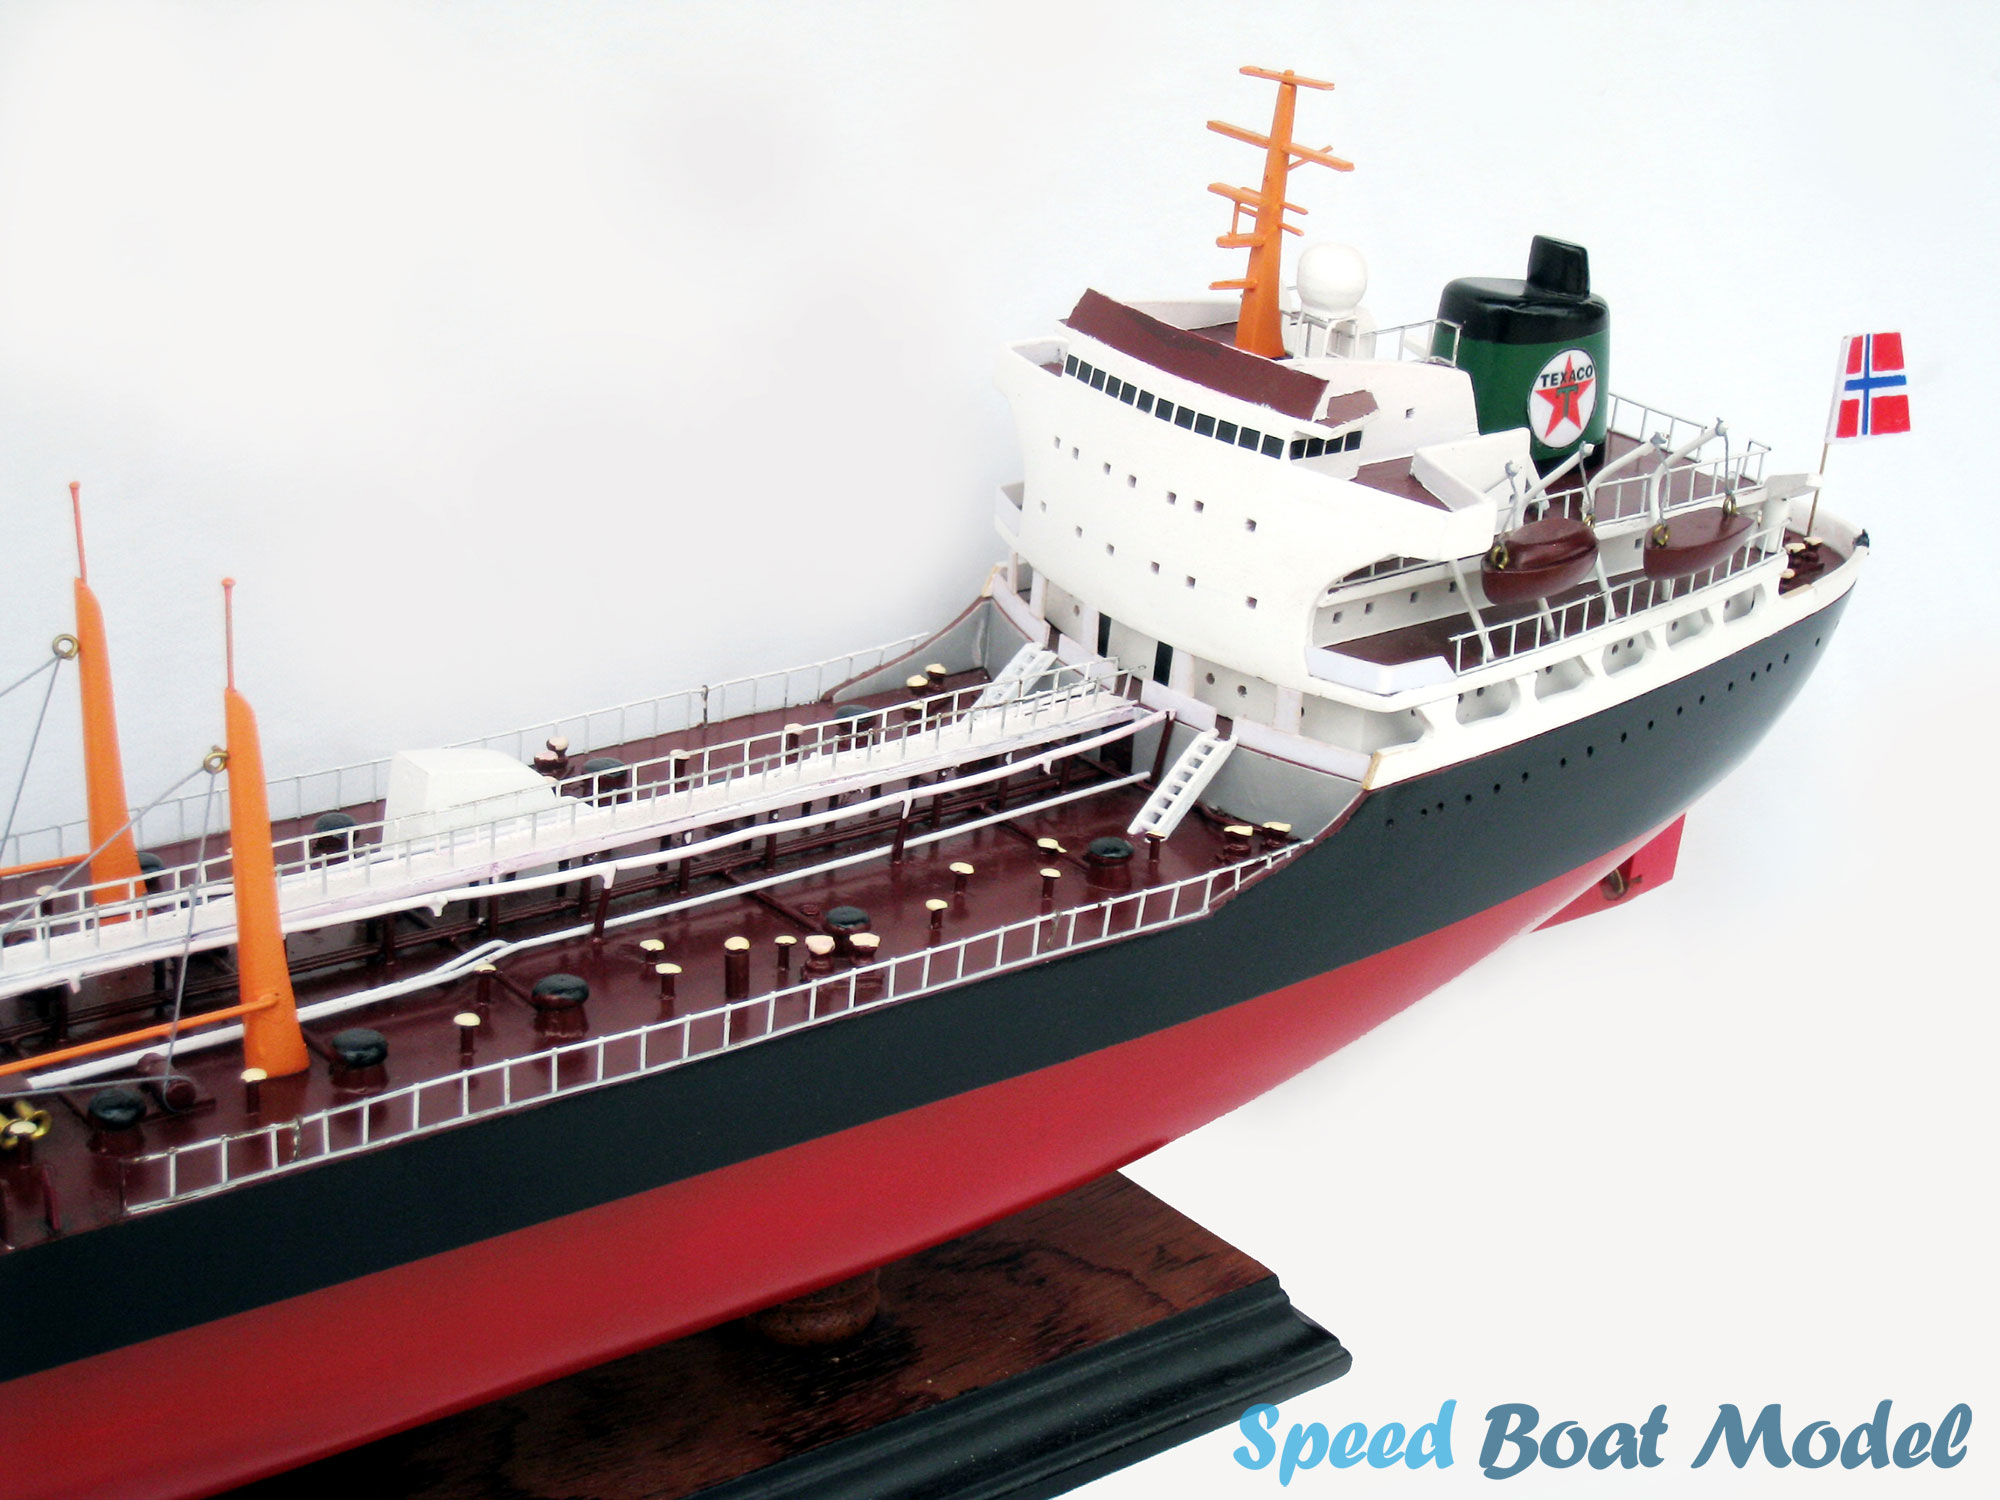 Texaco Bogota Commercial Ship Model 31.5"